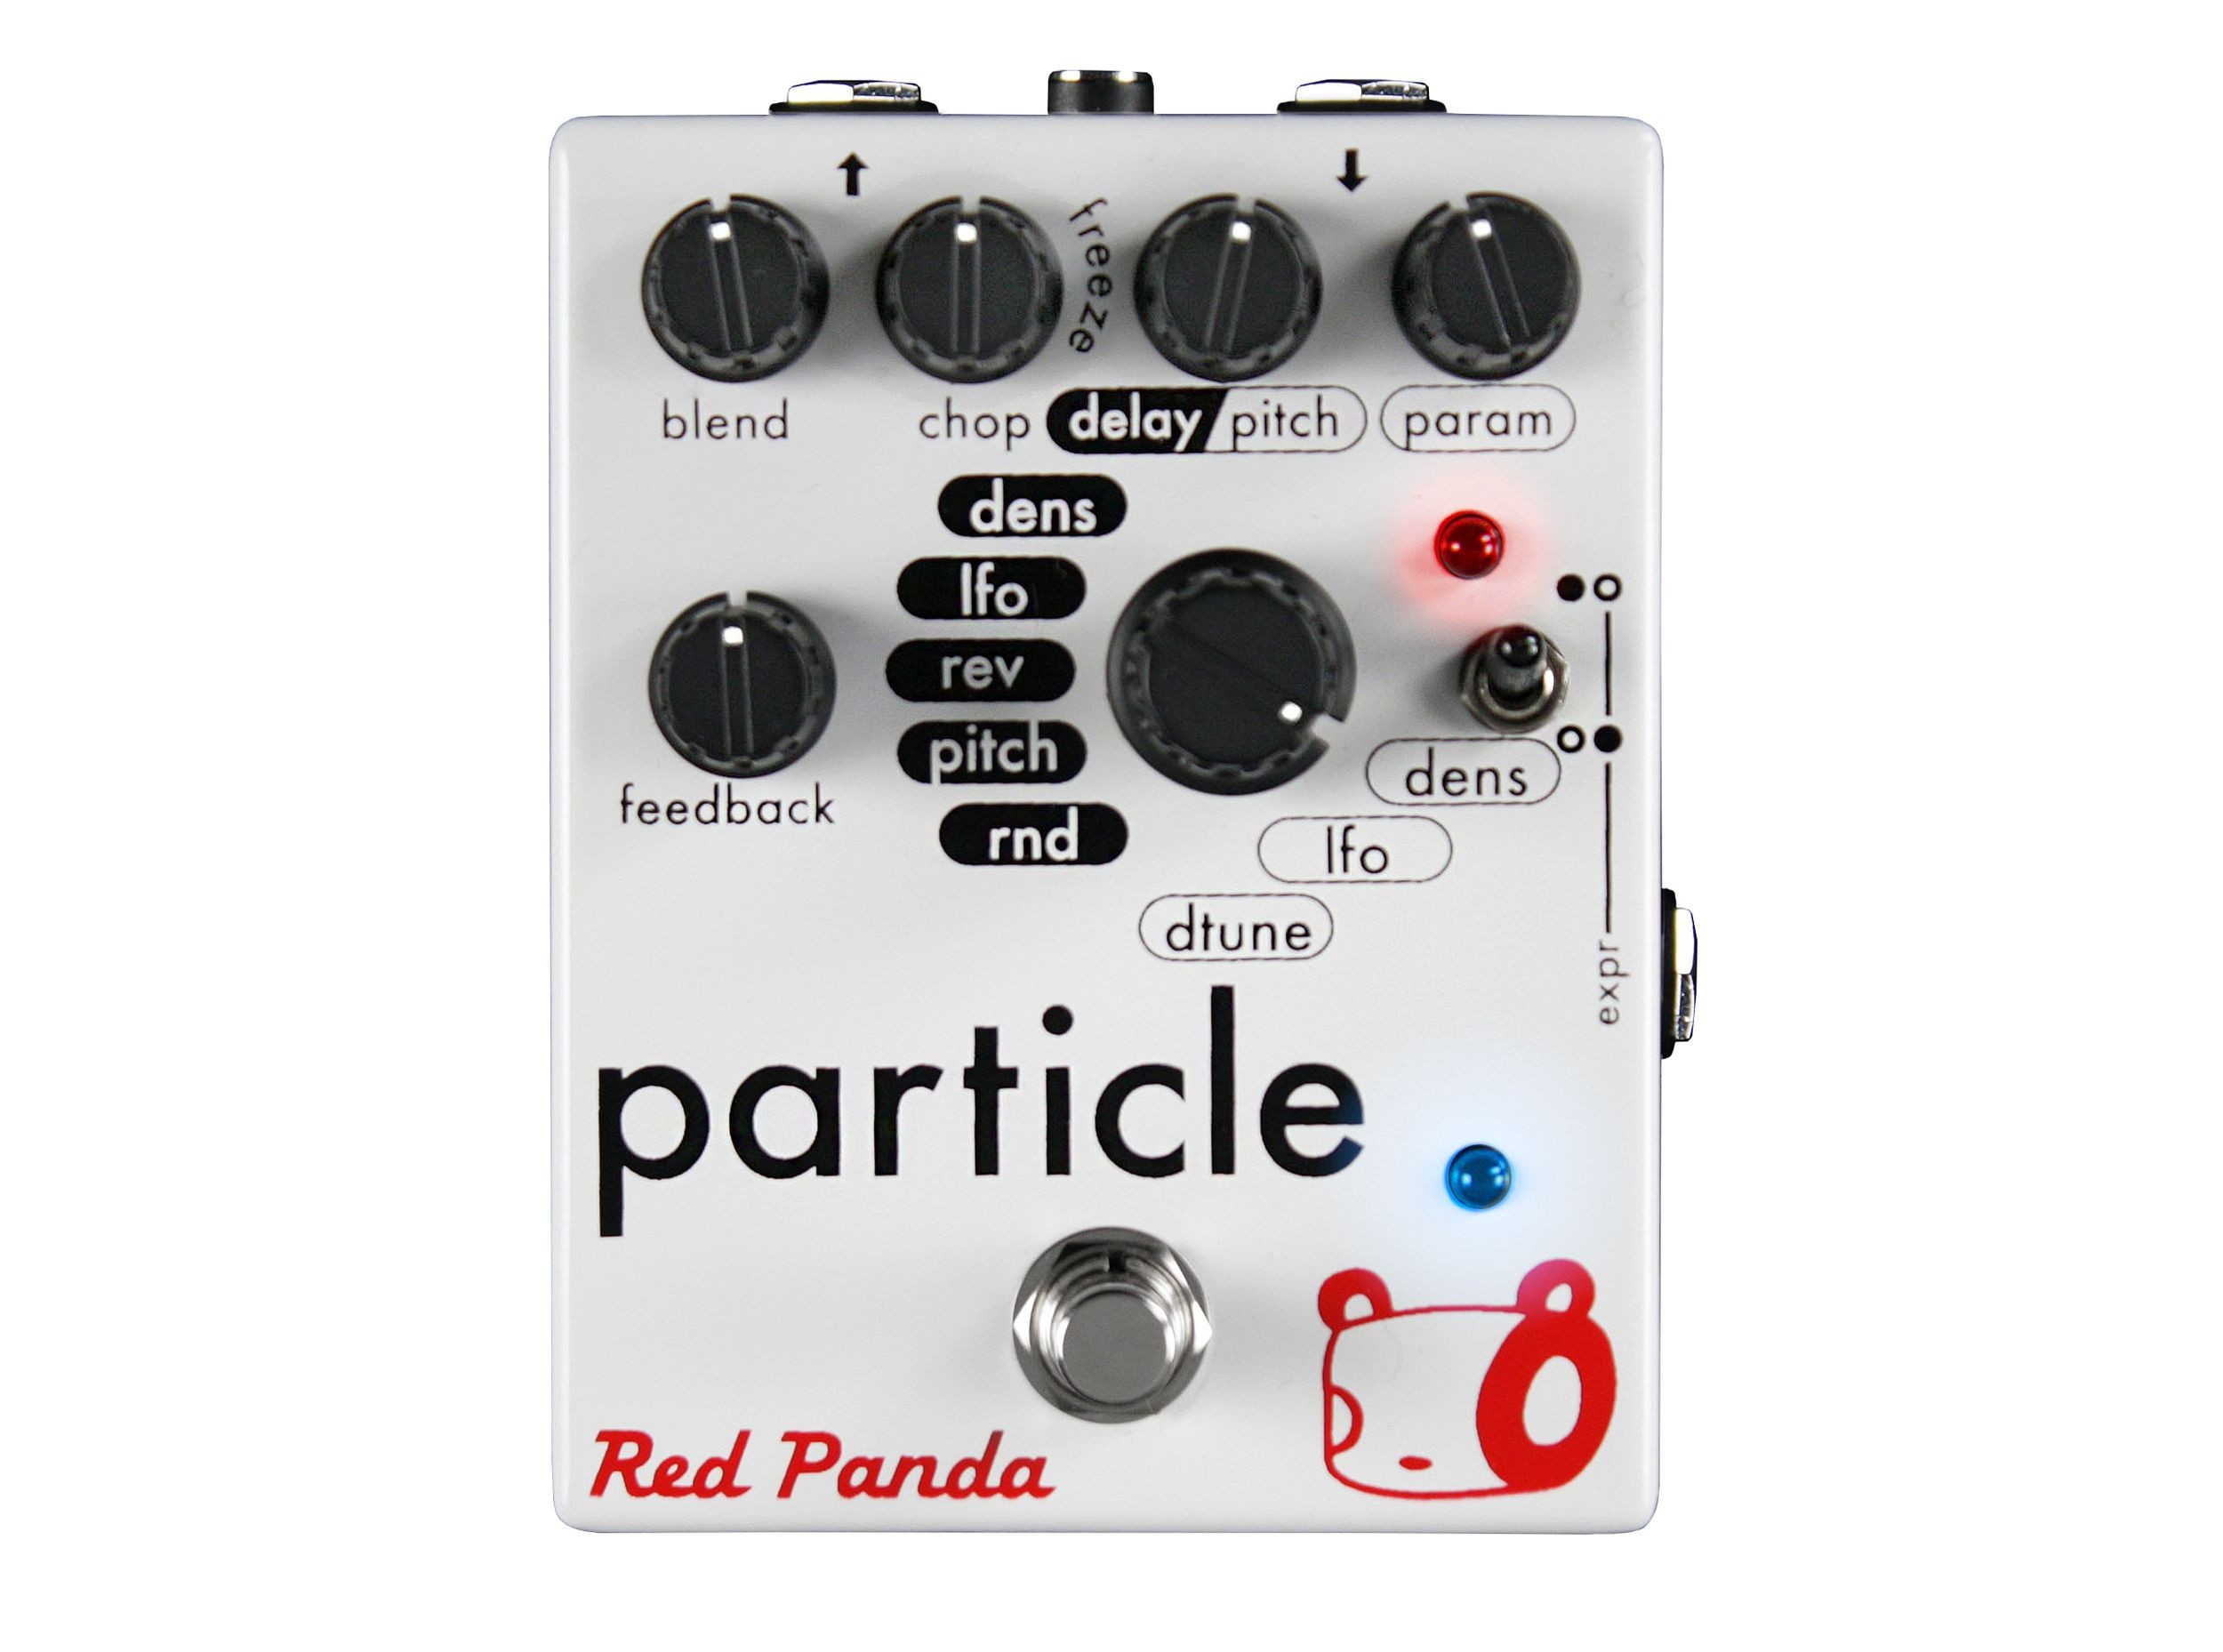 Engel Umoderne Solskoldning Red Panda Particle Granular Delay Pitch Shifter - Perfect Circuit